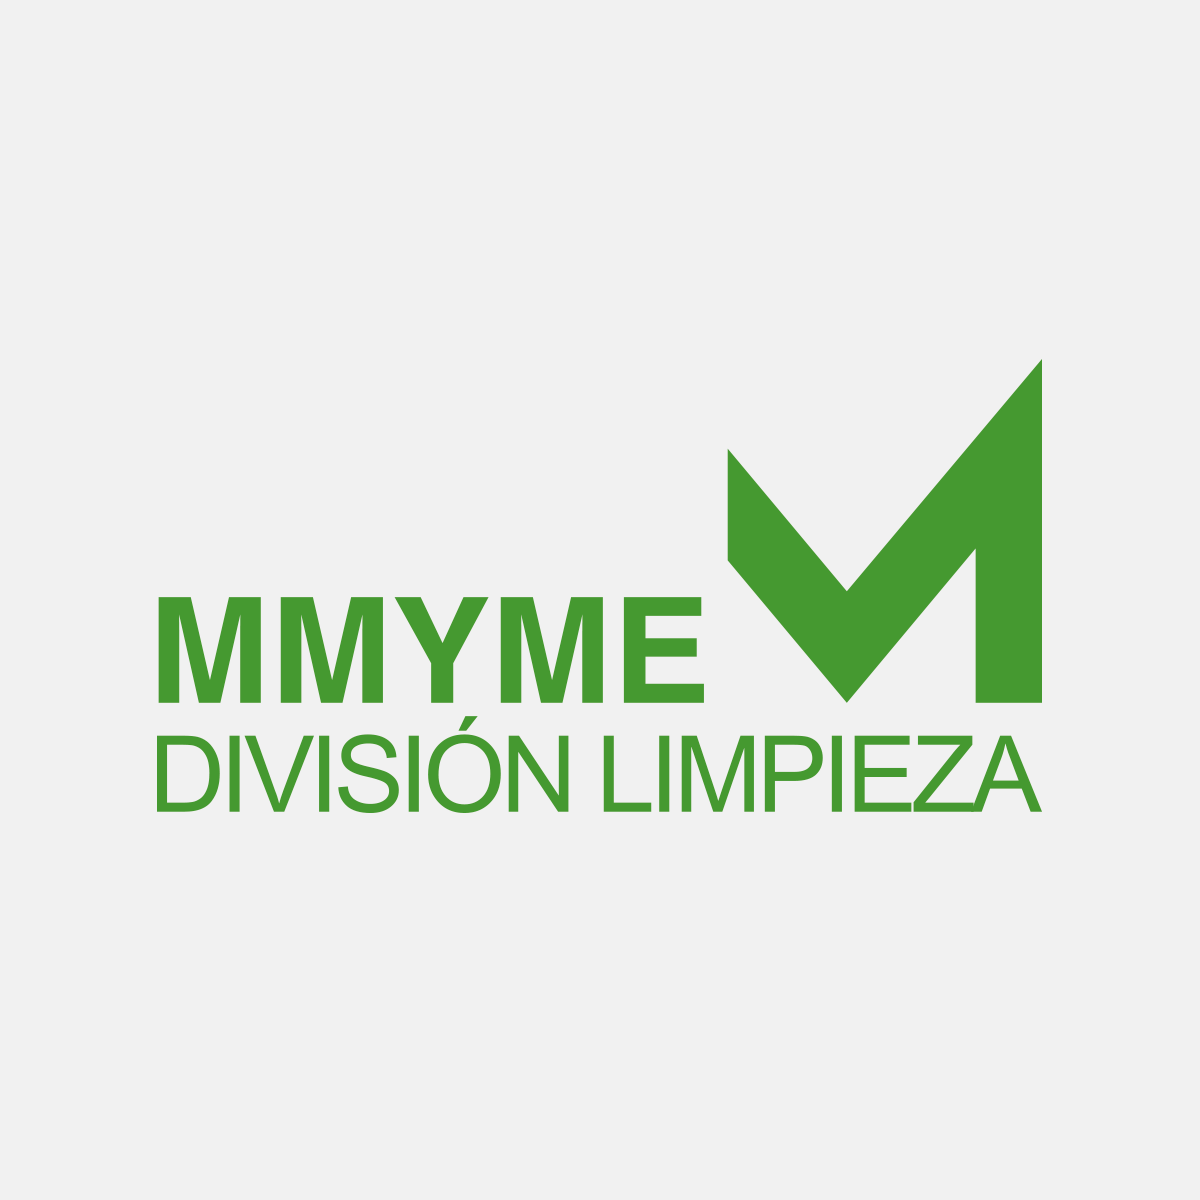 Myme Limpieza